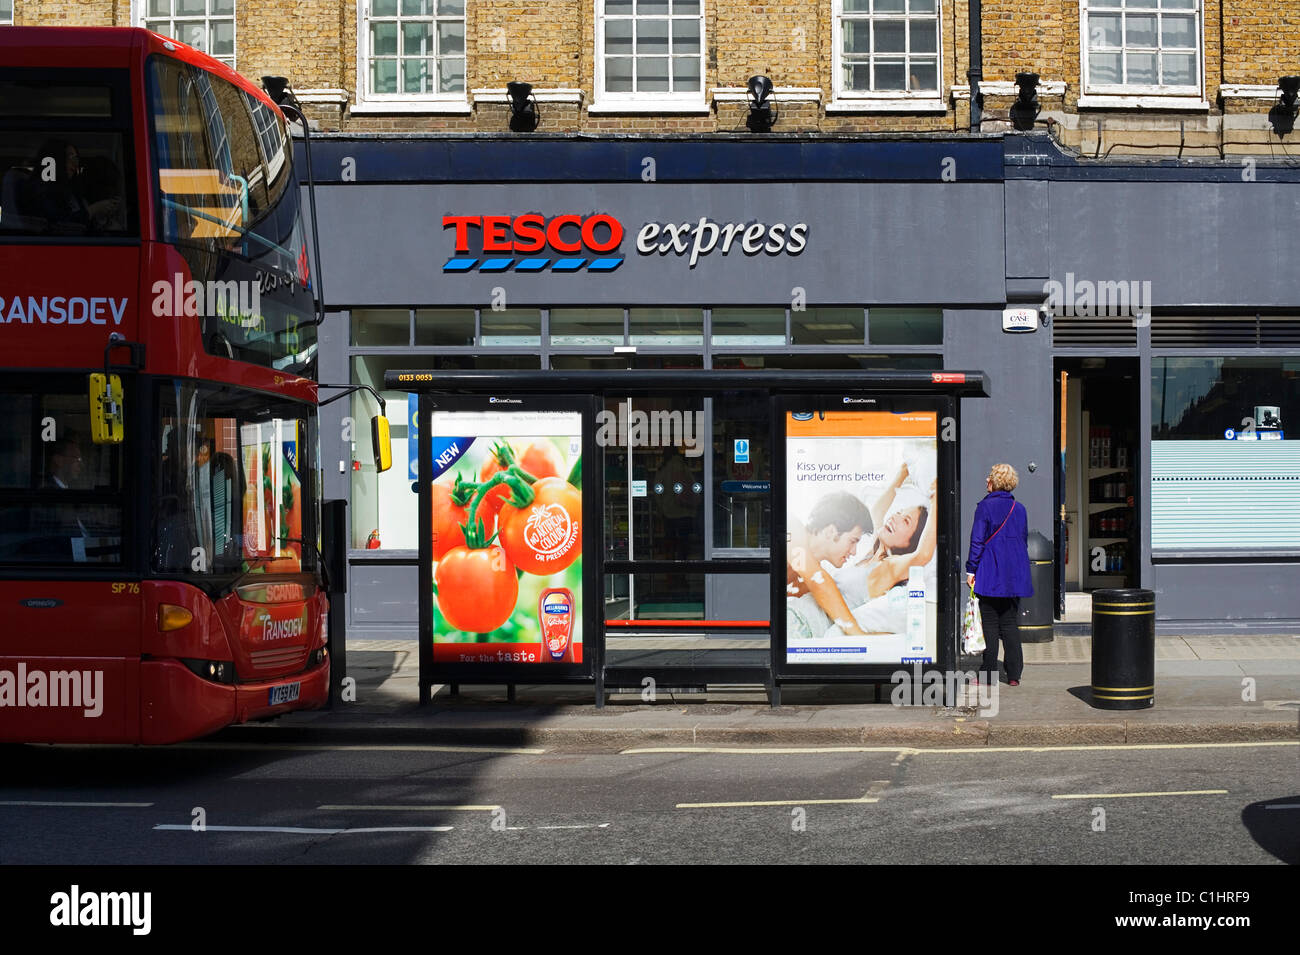 Tesco Express and bus stop - Baker Street, London, England, UK, Europe Stock Photo